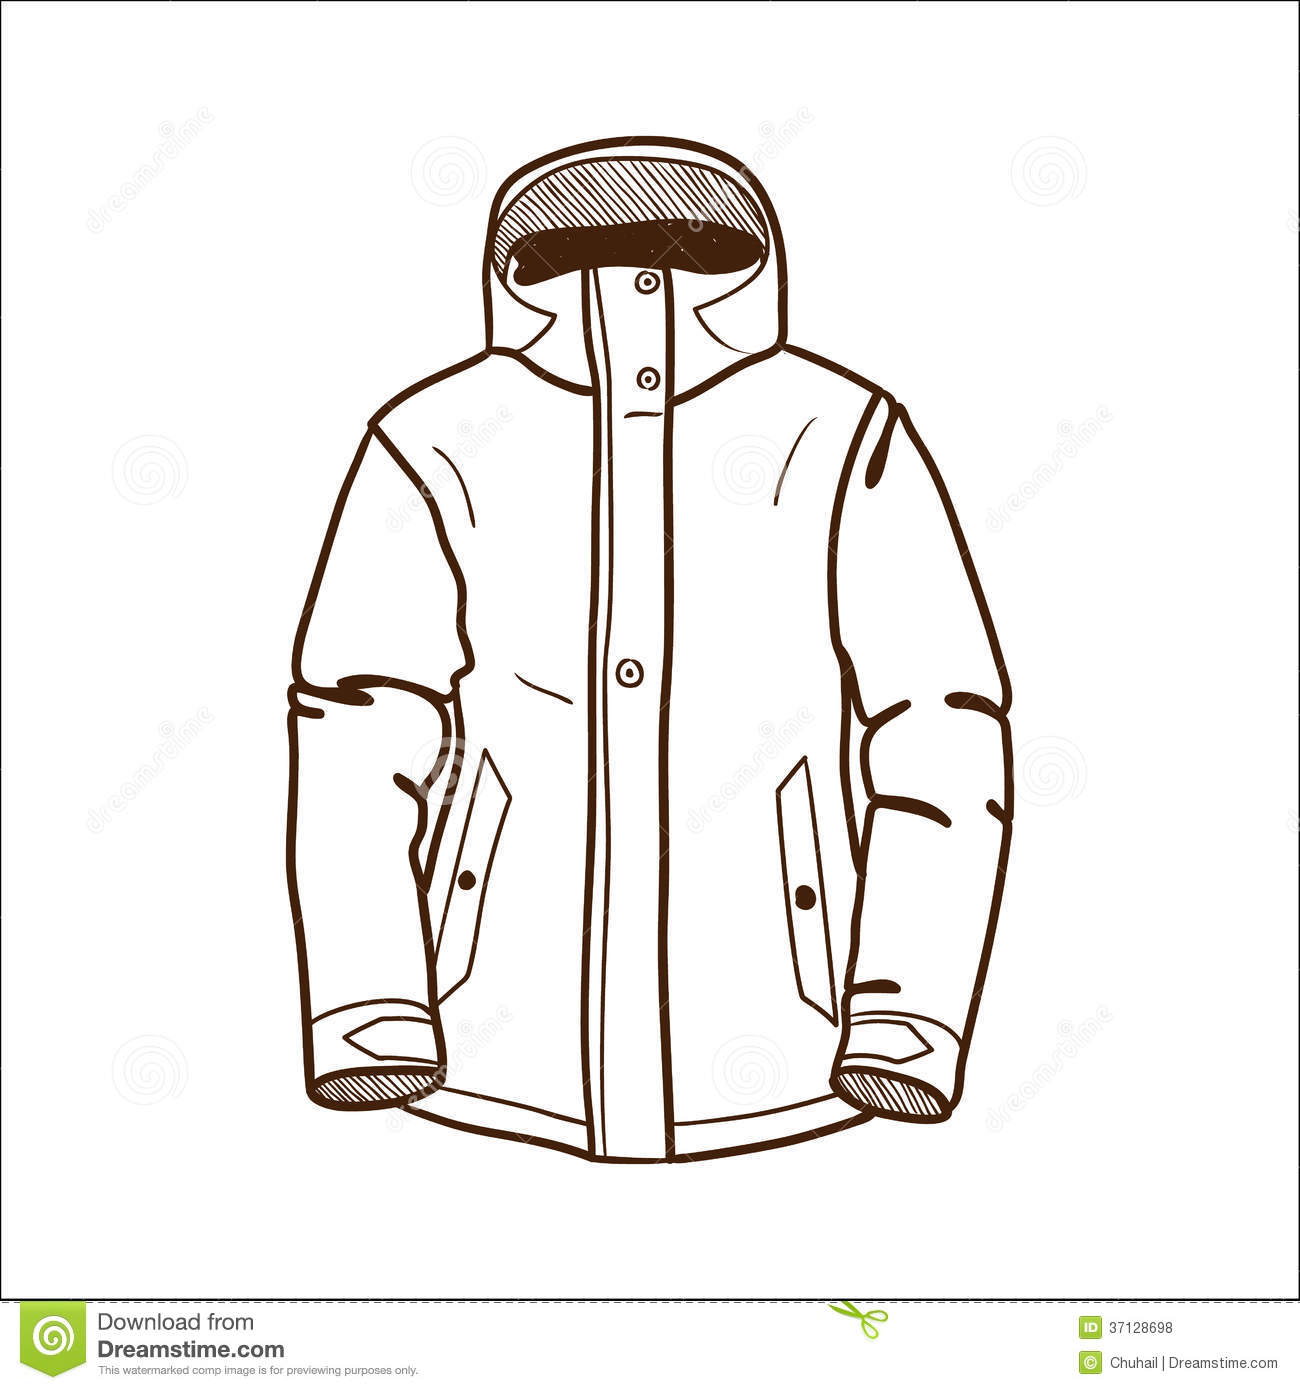 coat clipart ski jacket